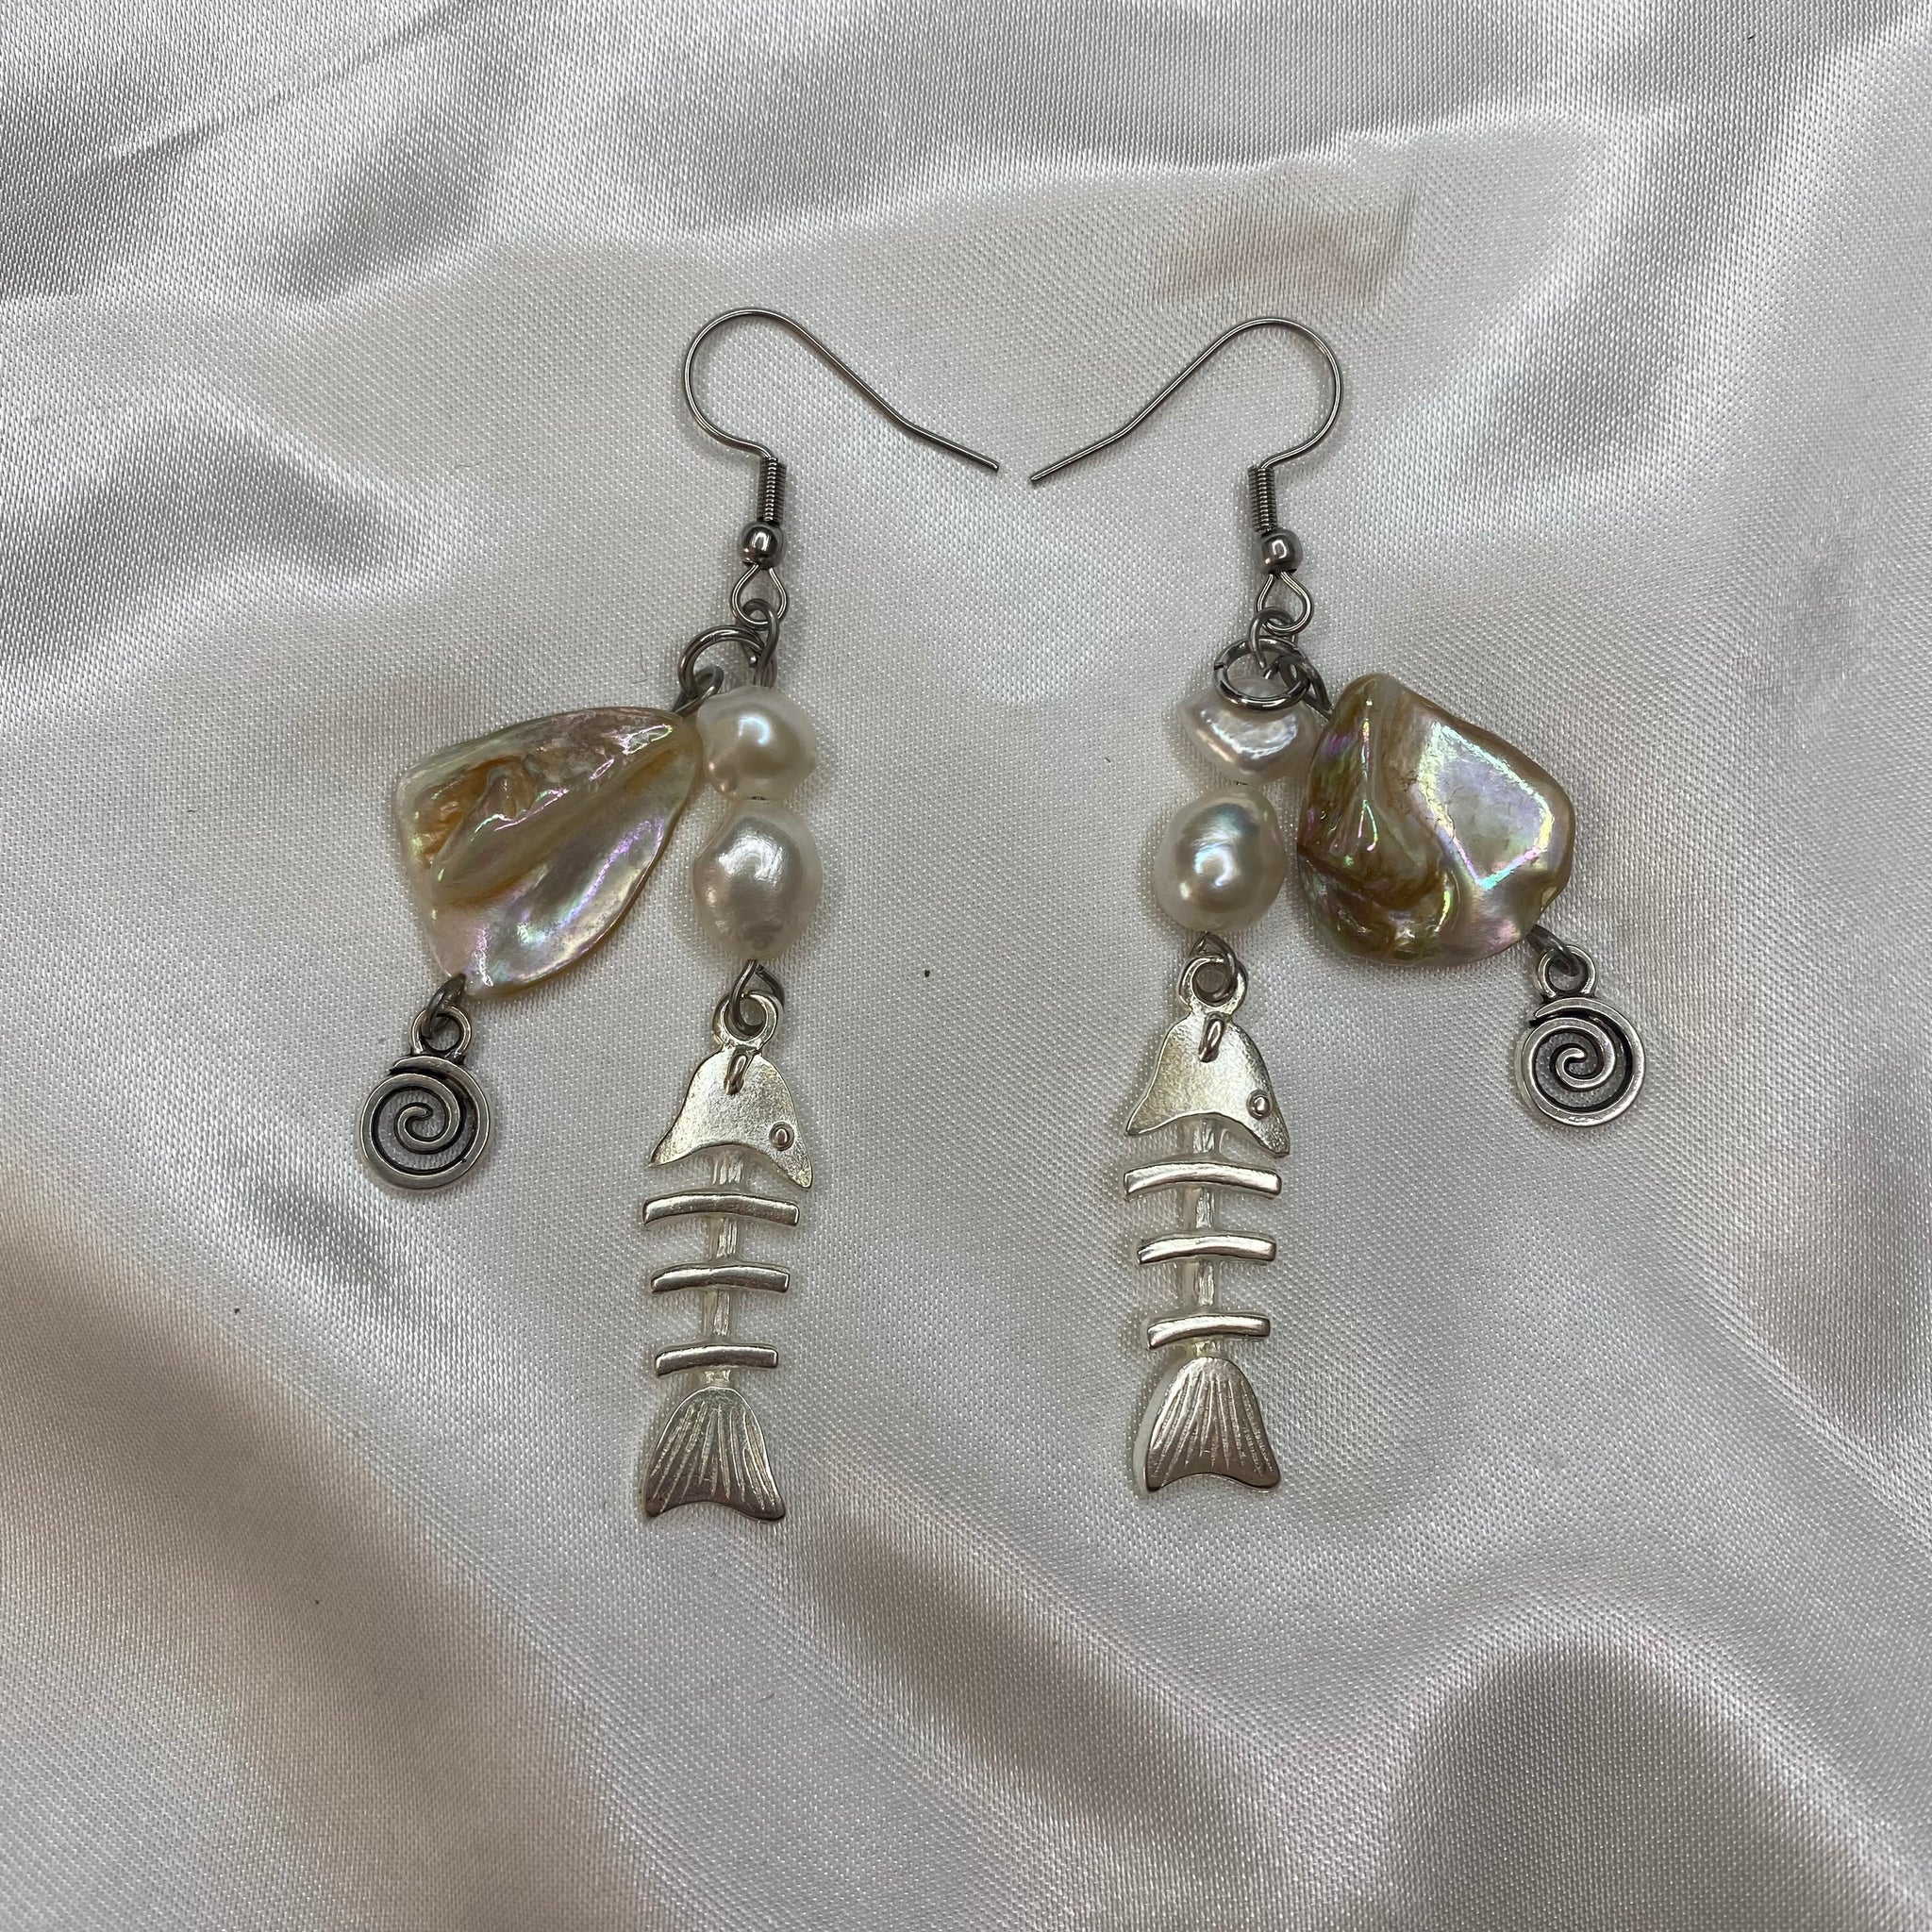 “Fish bone” earrings